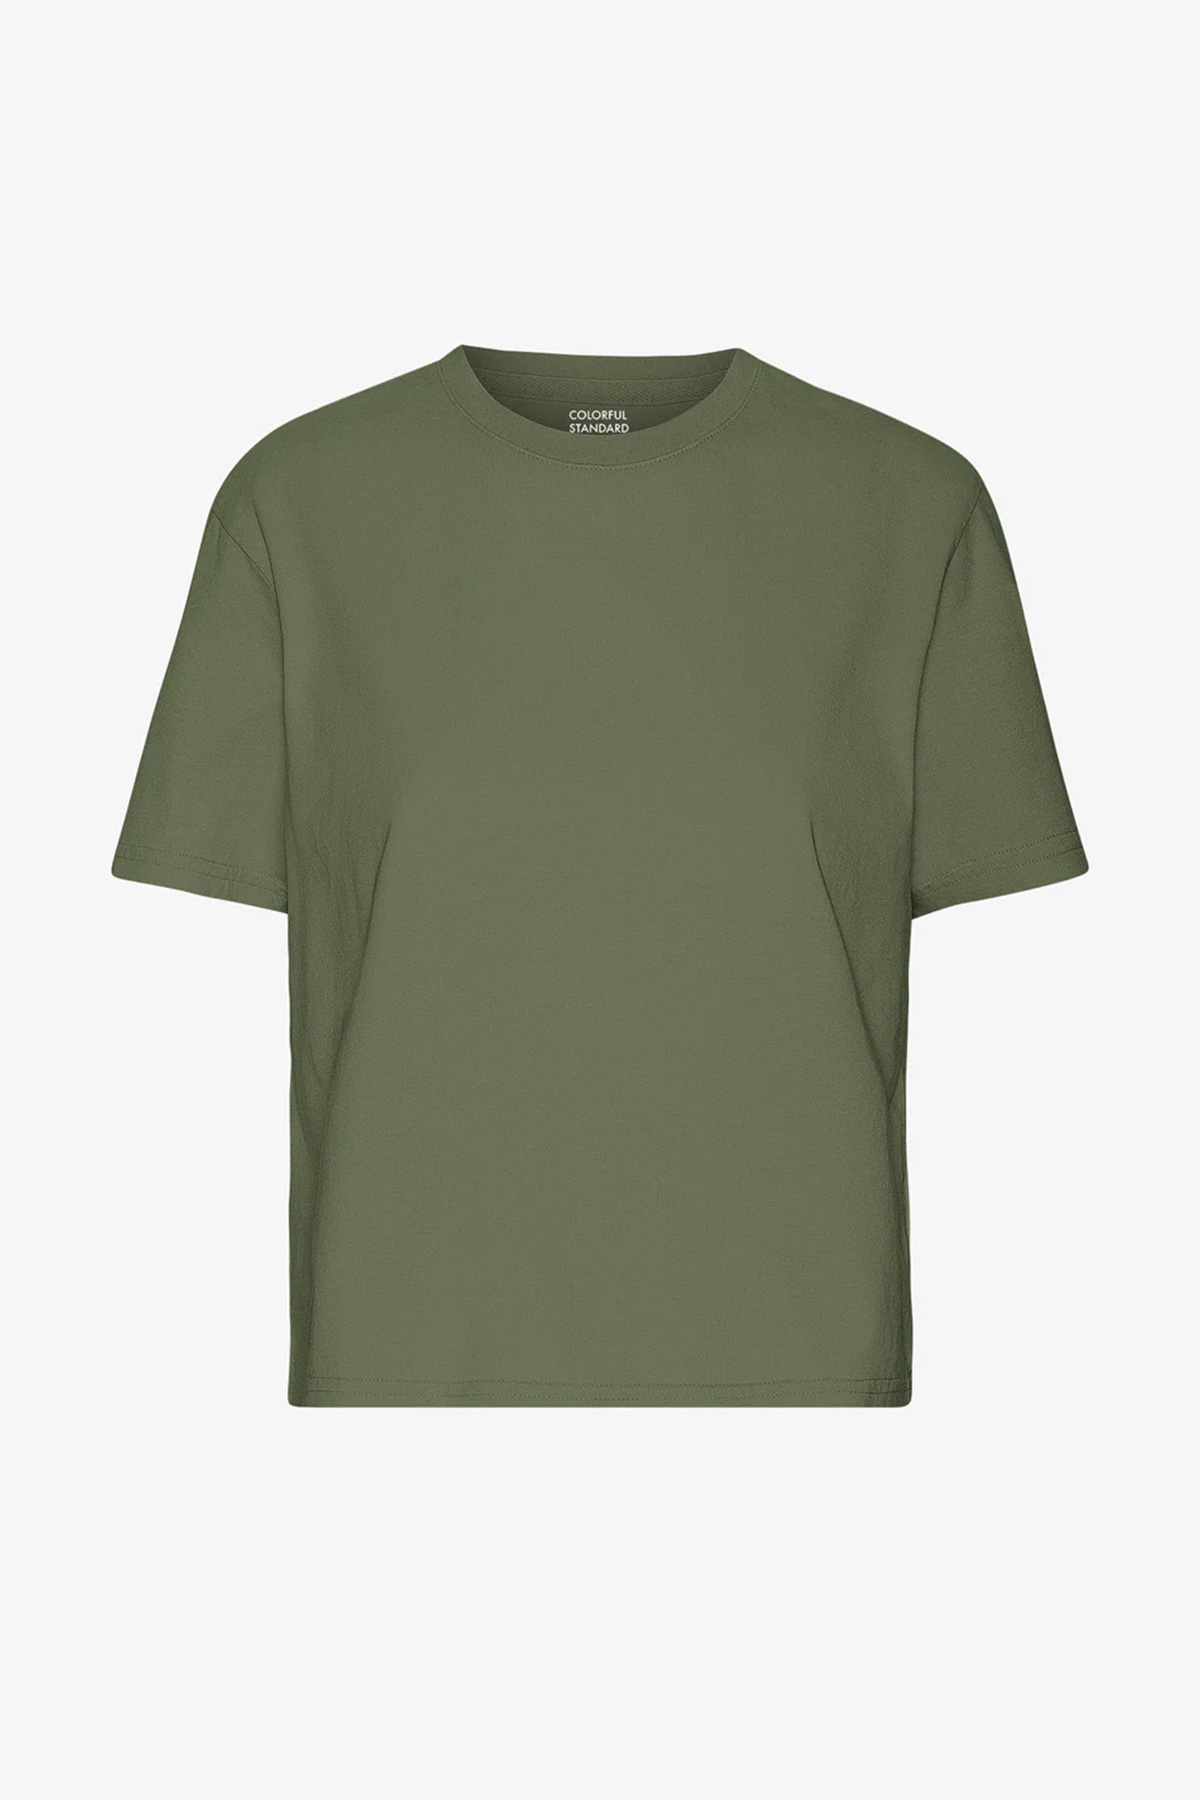 colorful standard t shirt organic broxy crop